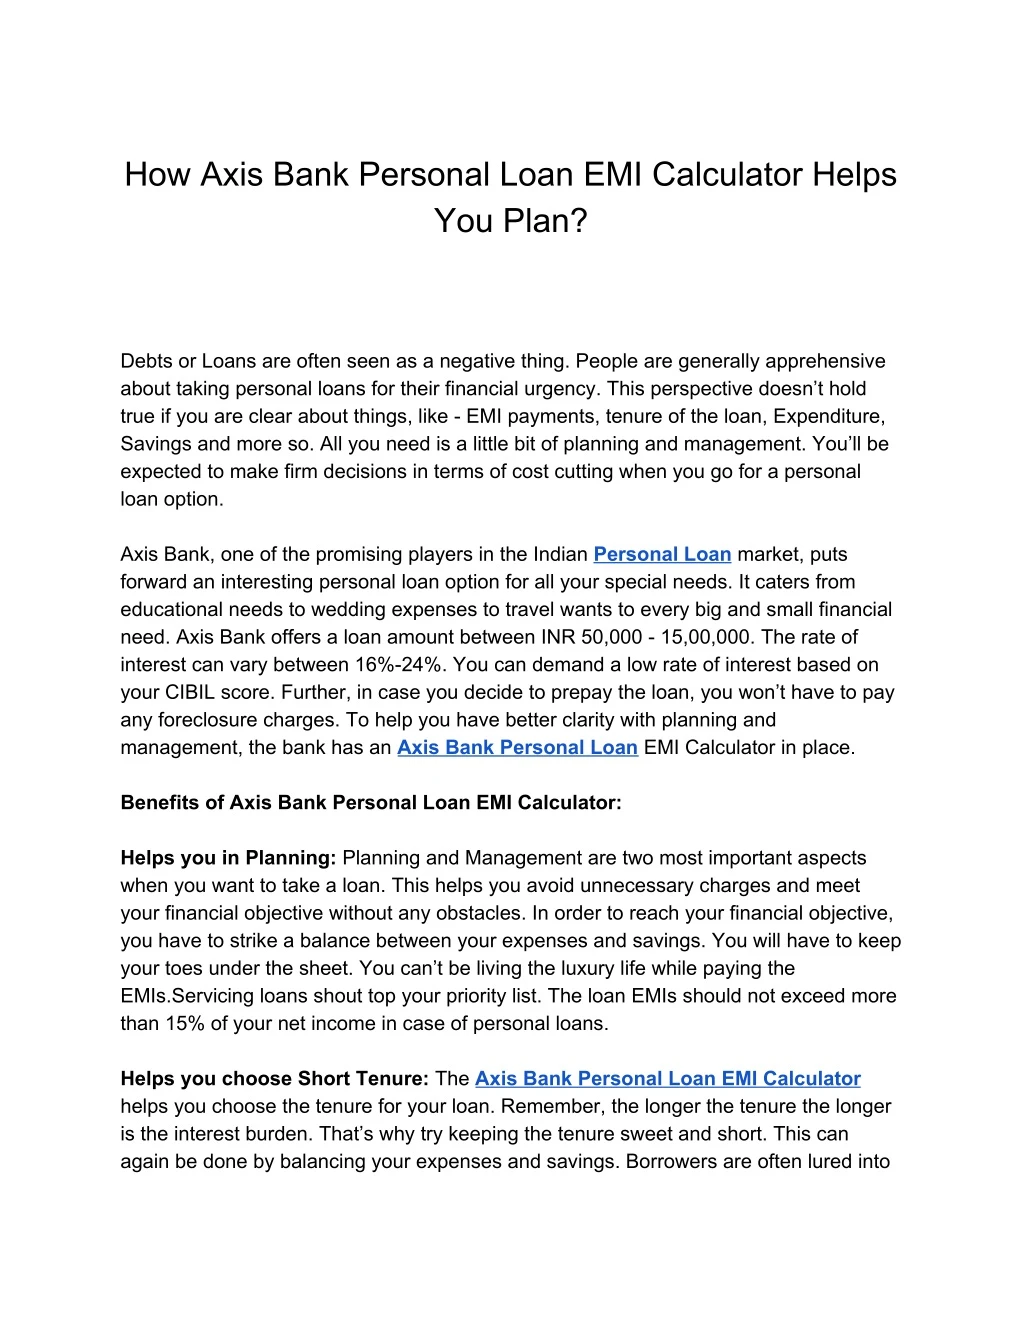 how axis bank personal loan emi calculator helps